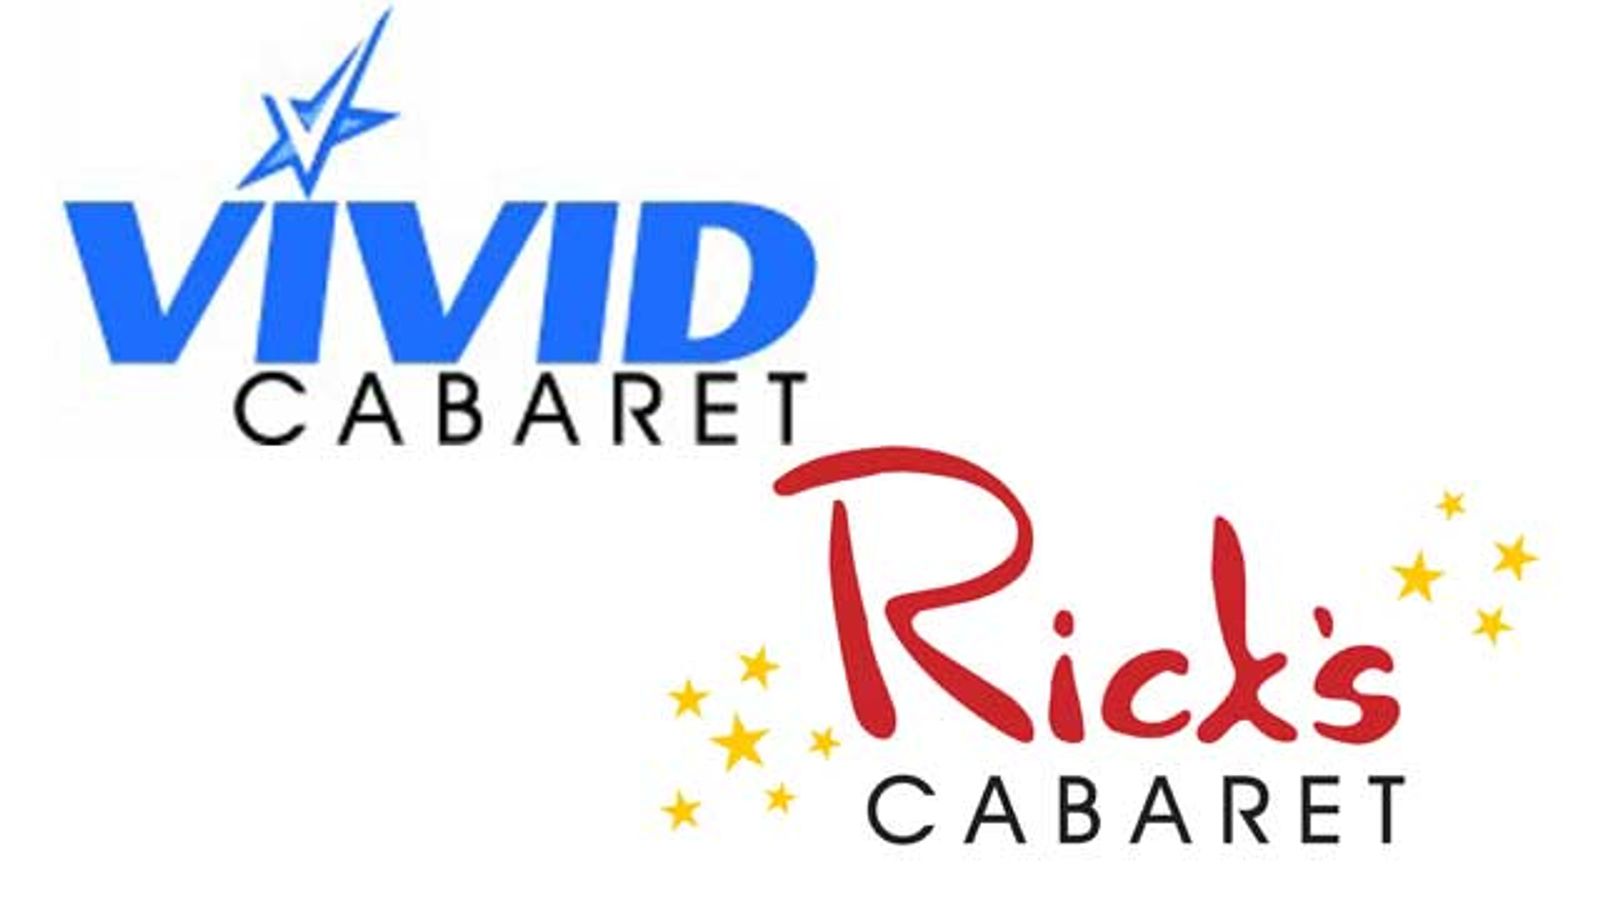 Rick's Cabaret Licenses 'Vivid Cabaret' for New Club in LA County